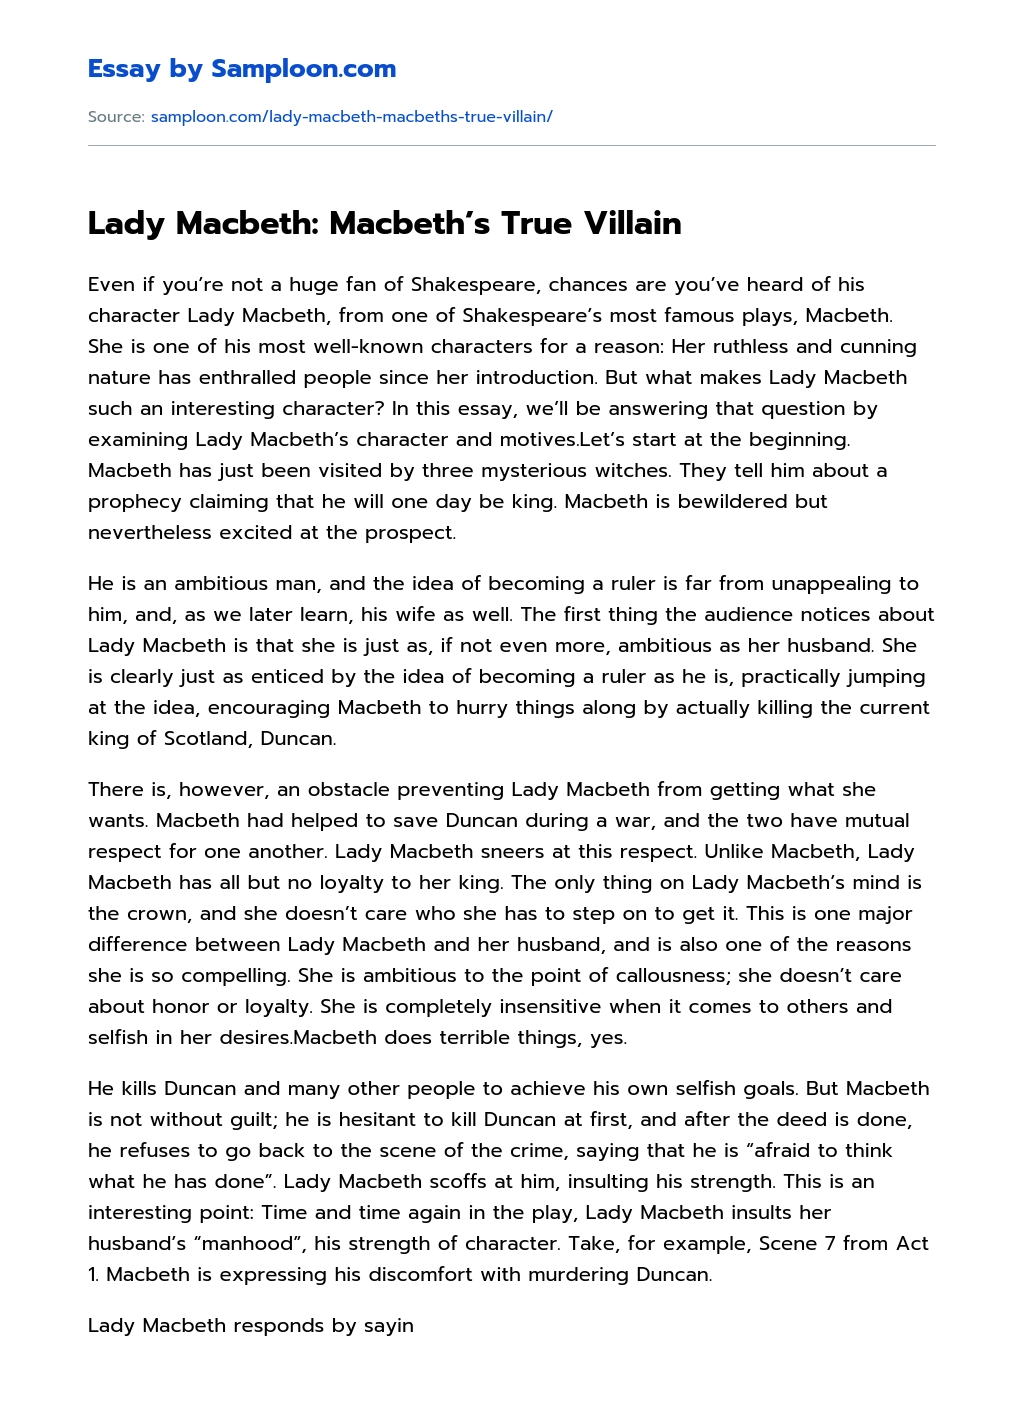 Lady Macbeth: Macbeth’s True Villain Character Analysis essay